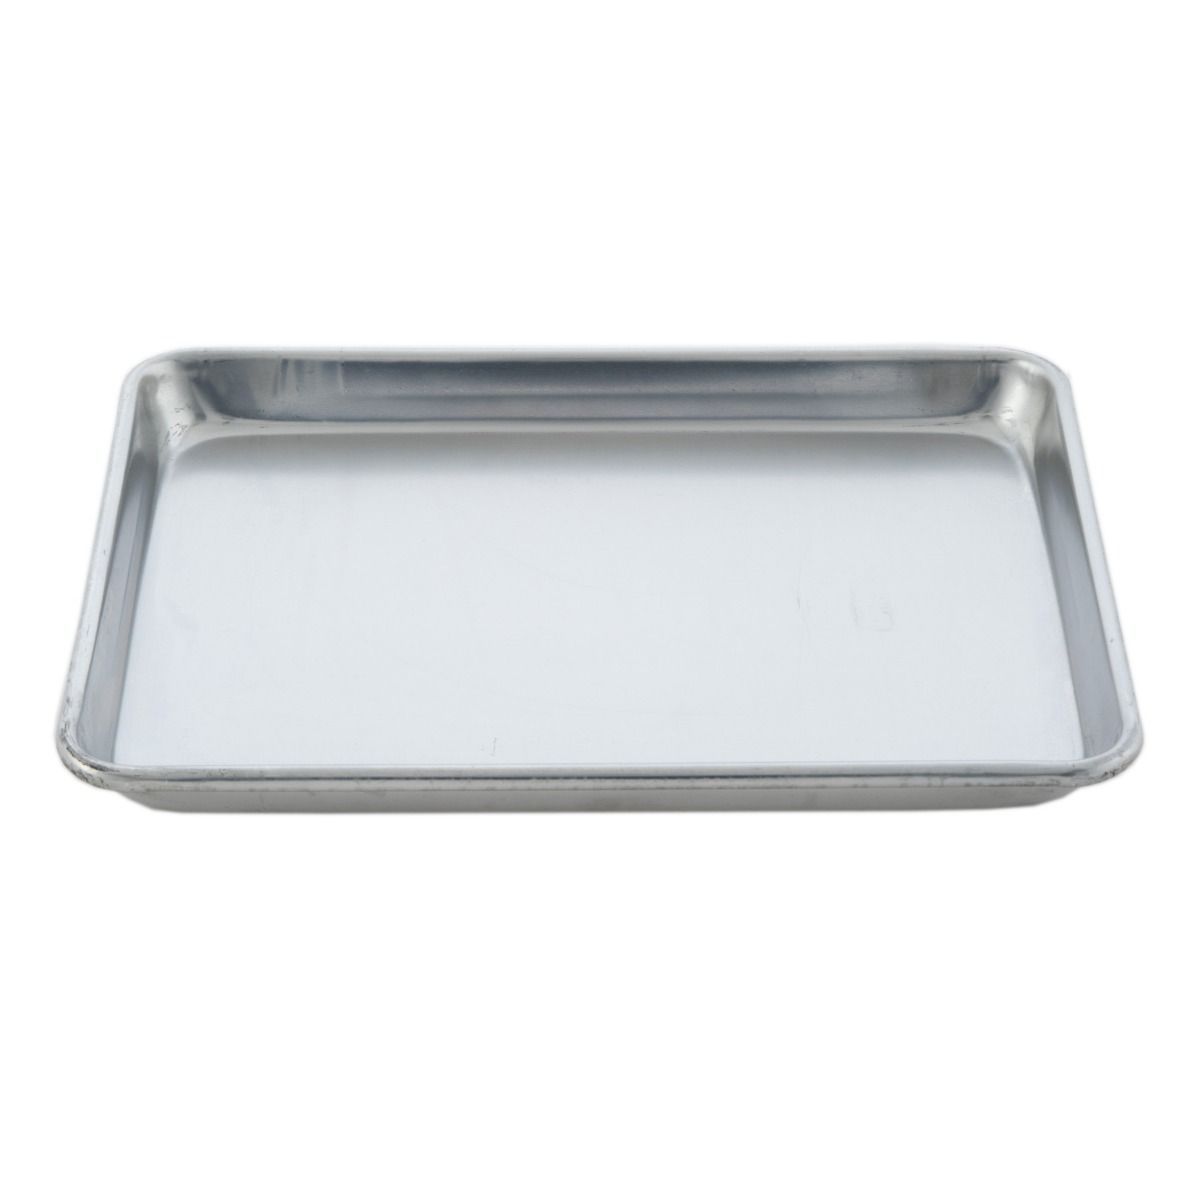 Artisan Professional Classic Aluminum Baking Sheet Pan with Lip, 13 x 9.5-Inch Quarter Sheet